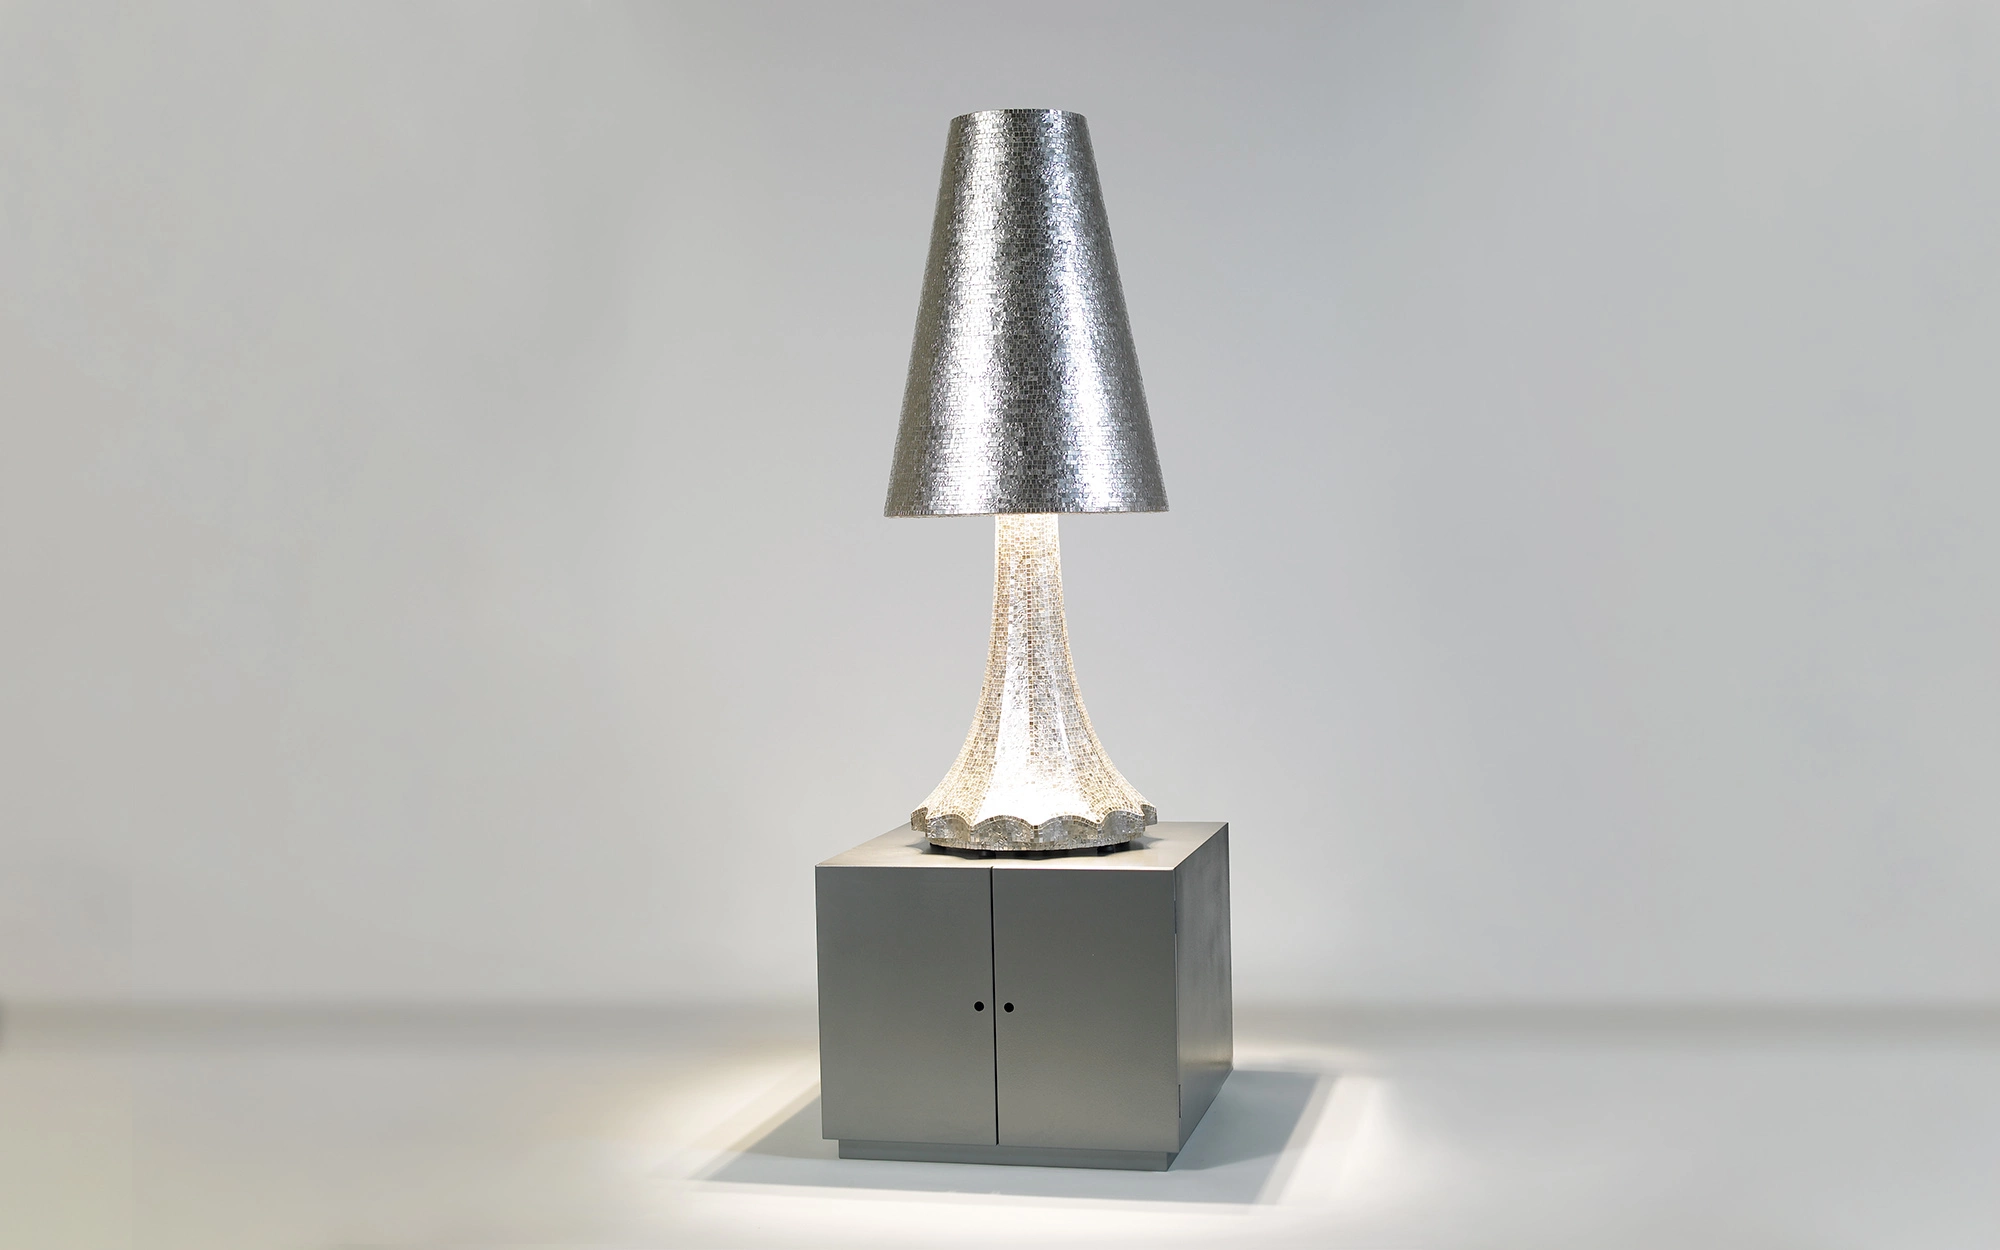 Lampada white gold - Alessandro Mendini - Armchair - Galerie kreo